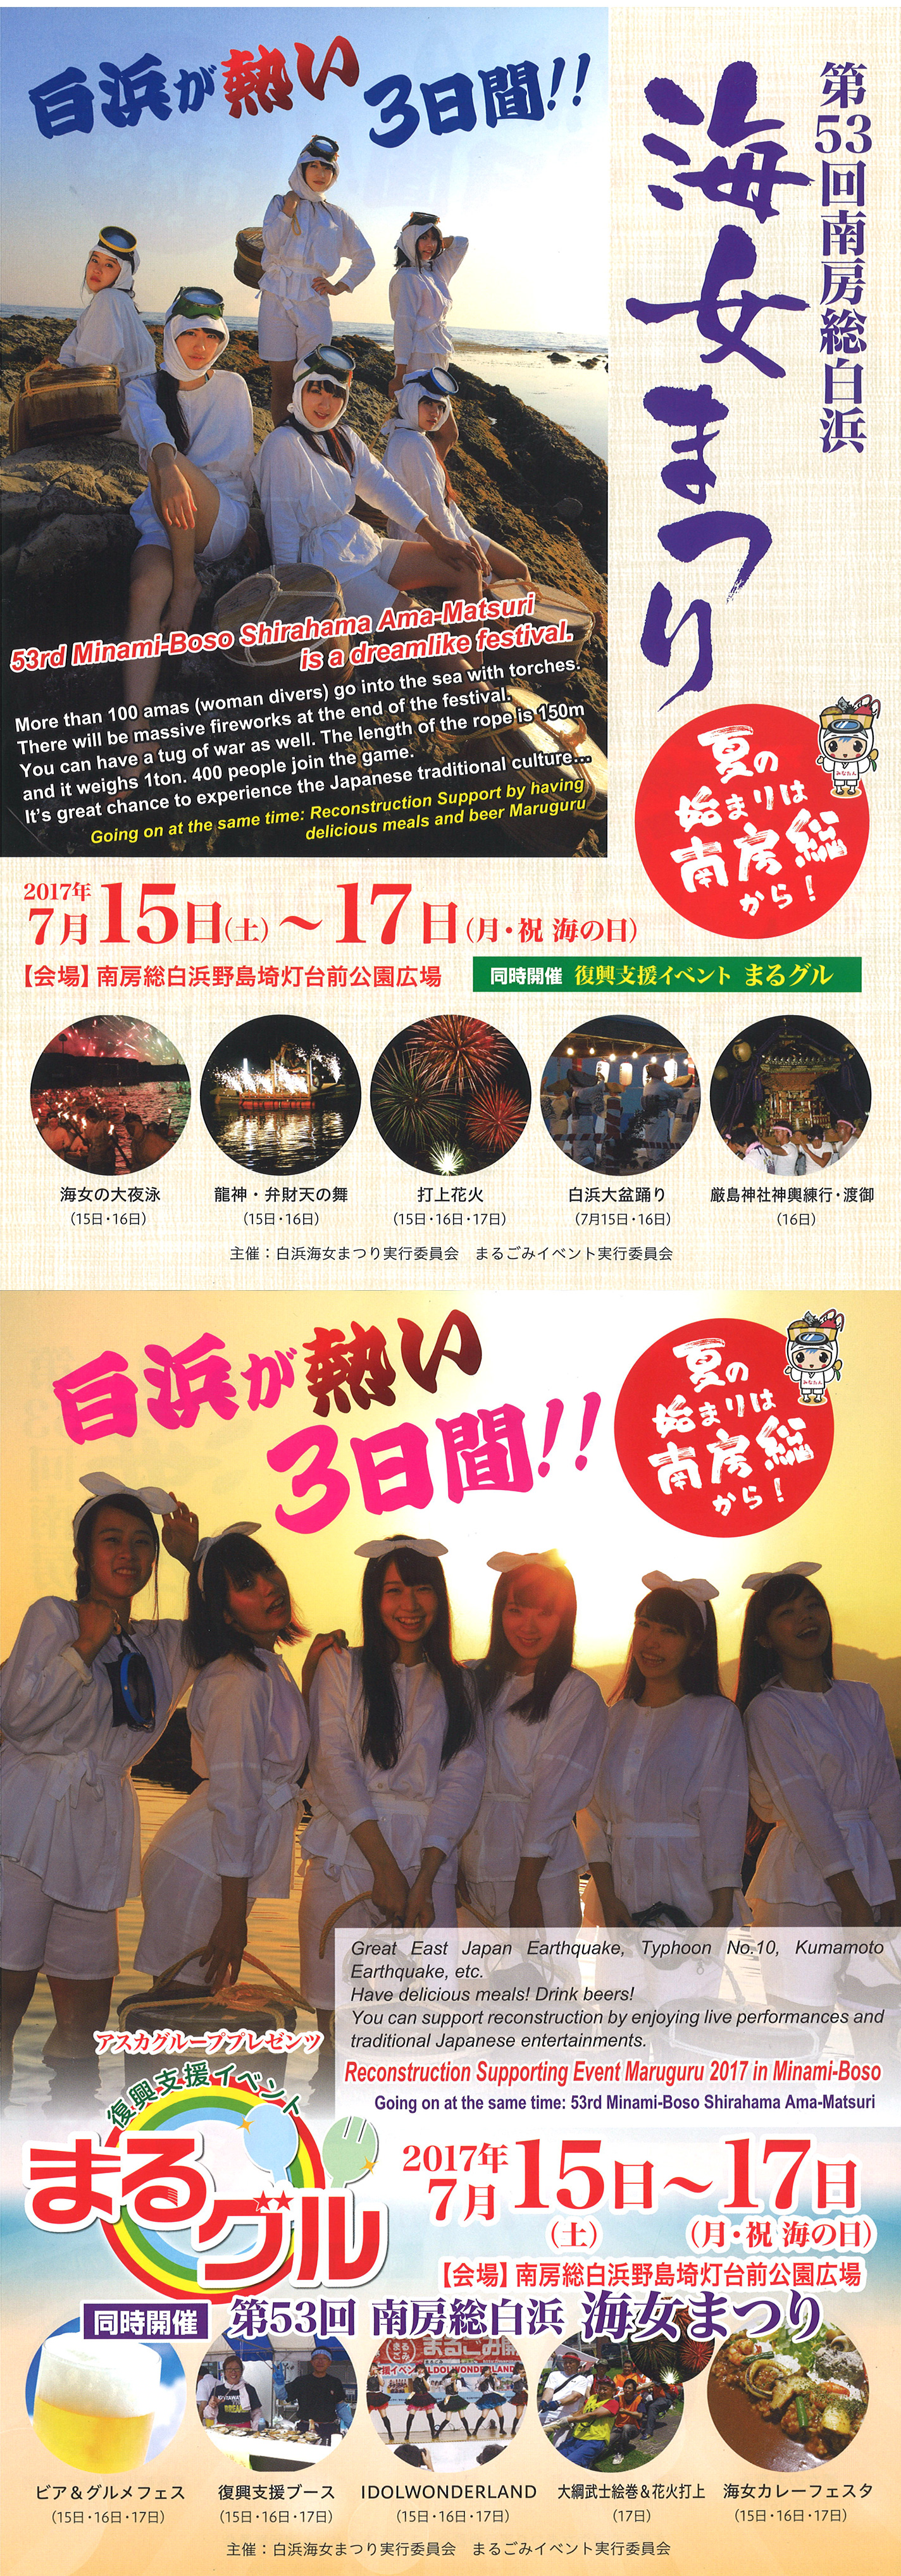 53rd Minami-Boso Shirahama Ama-Matsuri is a dreamlike festival.